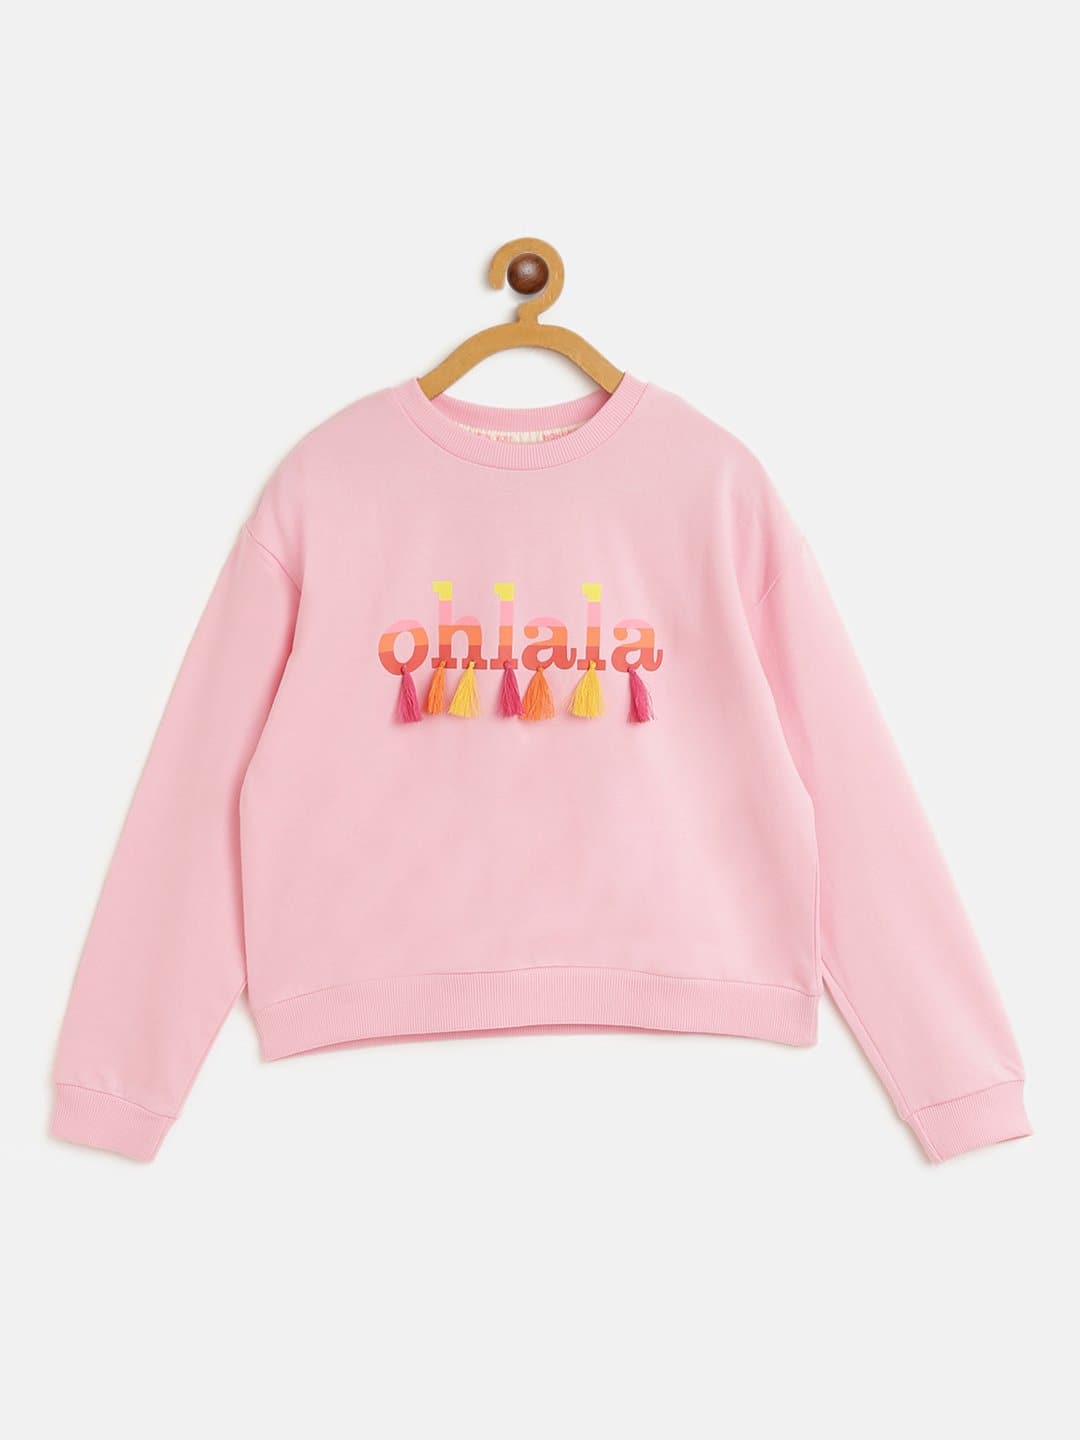 Girls Pink OHLALA Print Sweatshirt-Girls Sweatshirts-SASSAFRAS